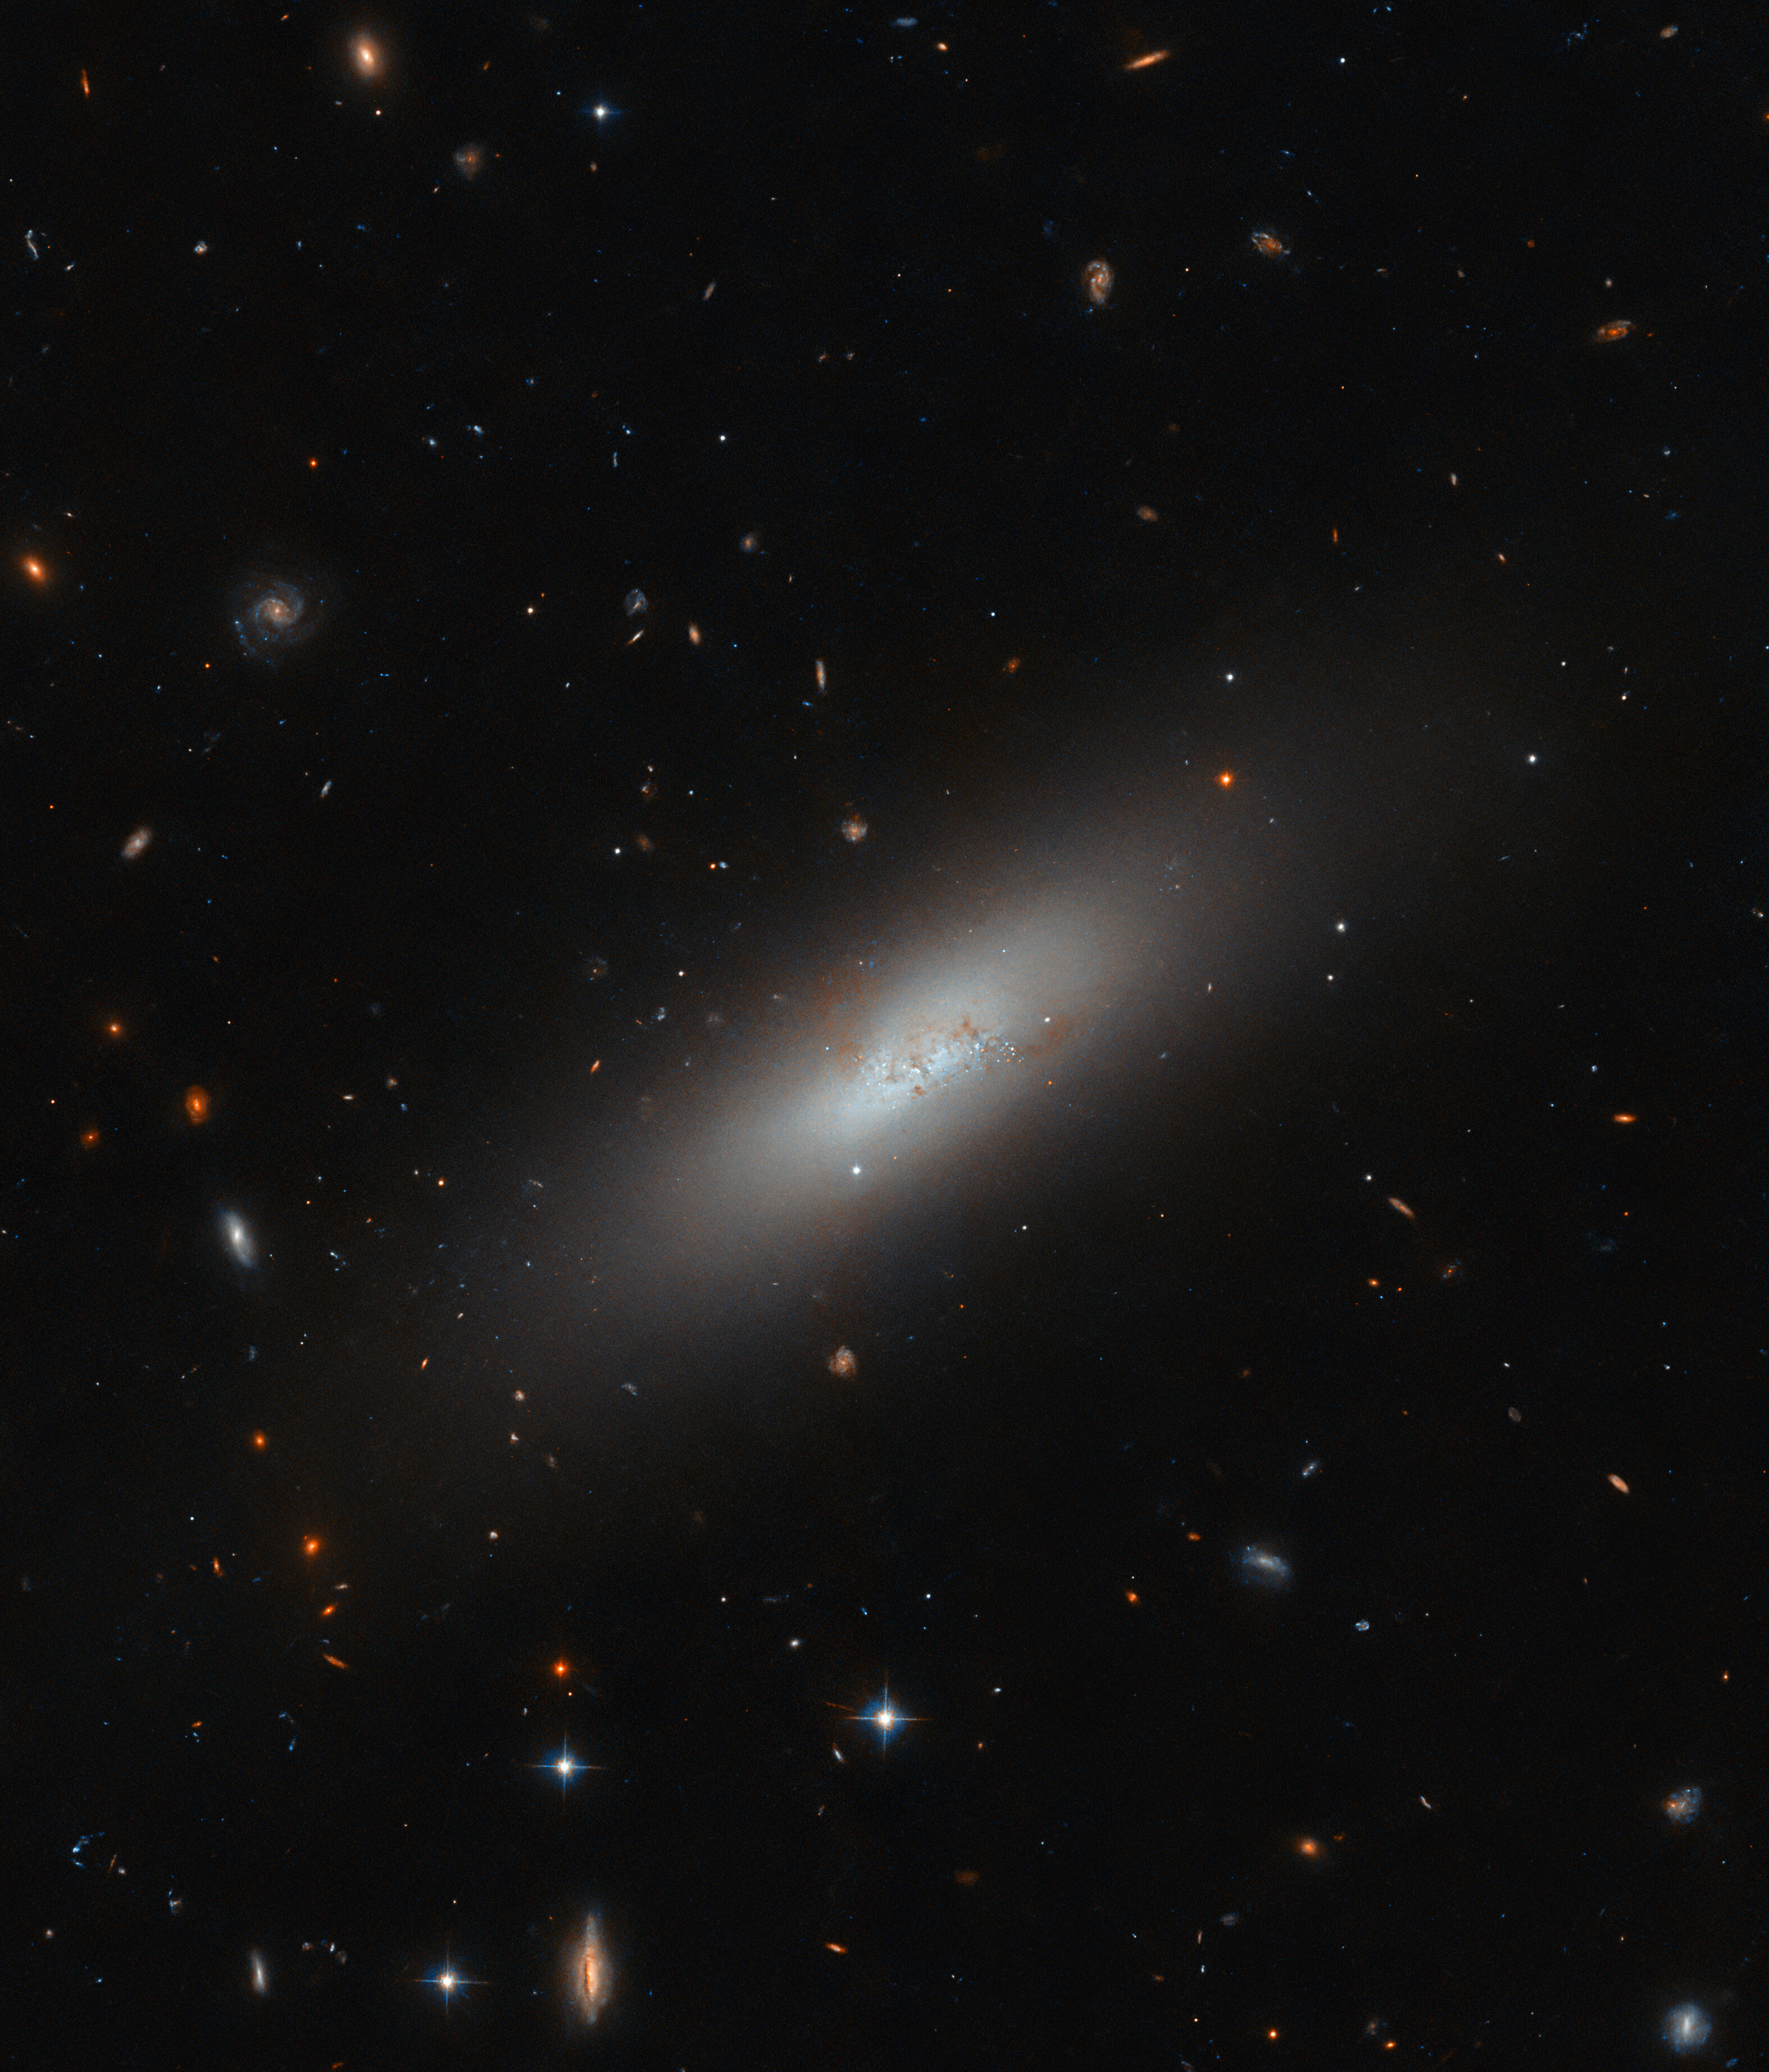 Hubble Spies a Diminutive Galaxy